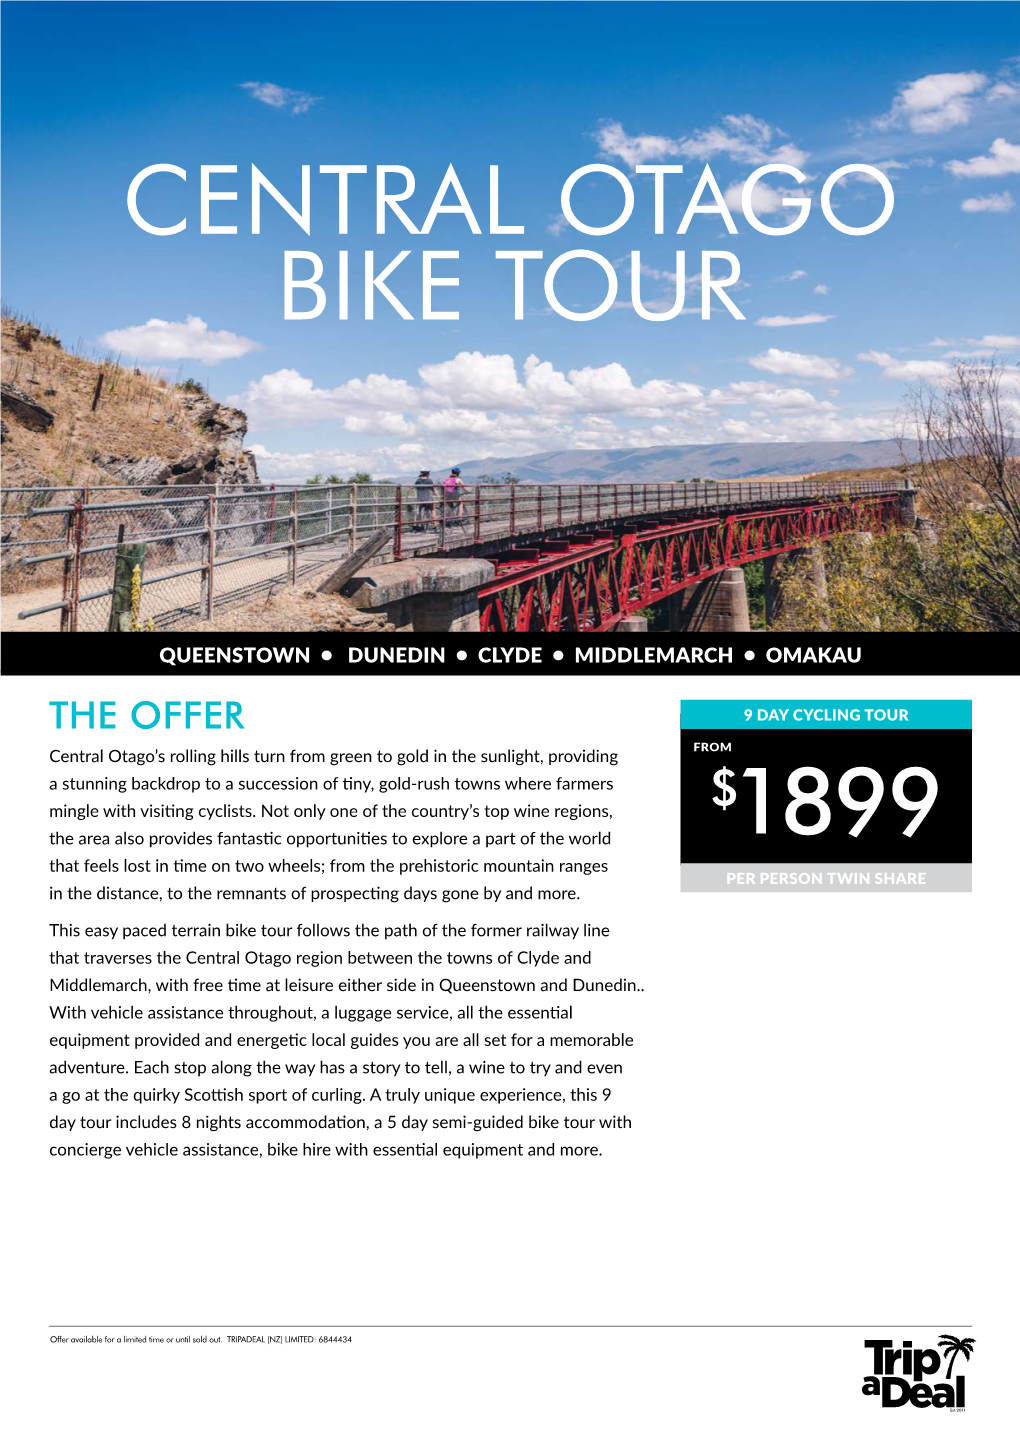 Central Otago Bike Tour